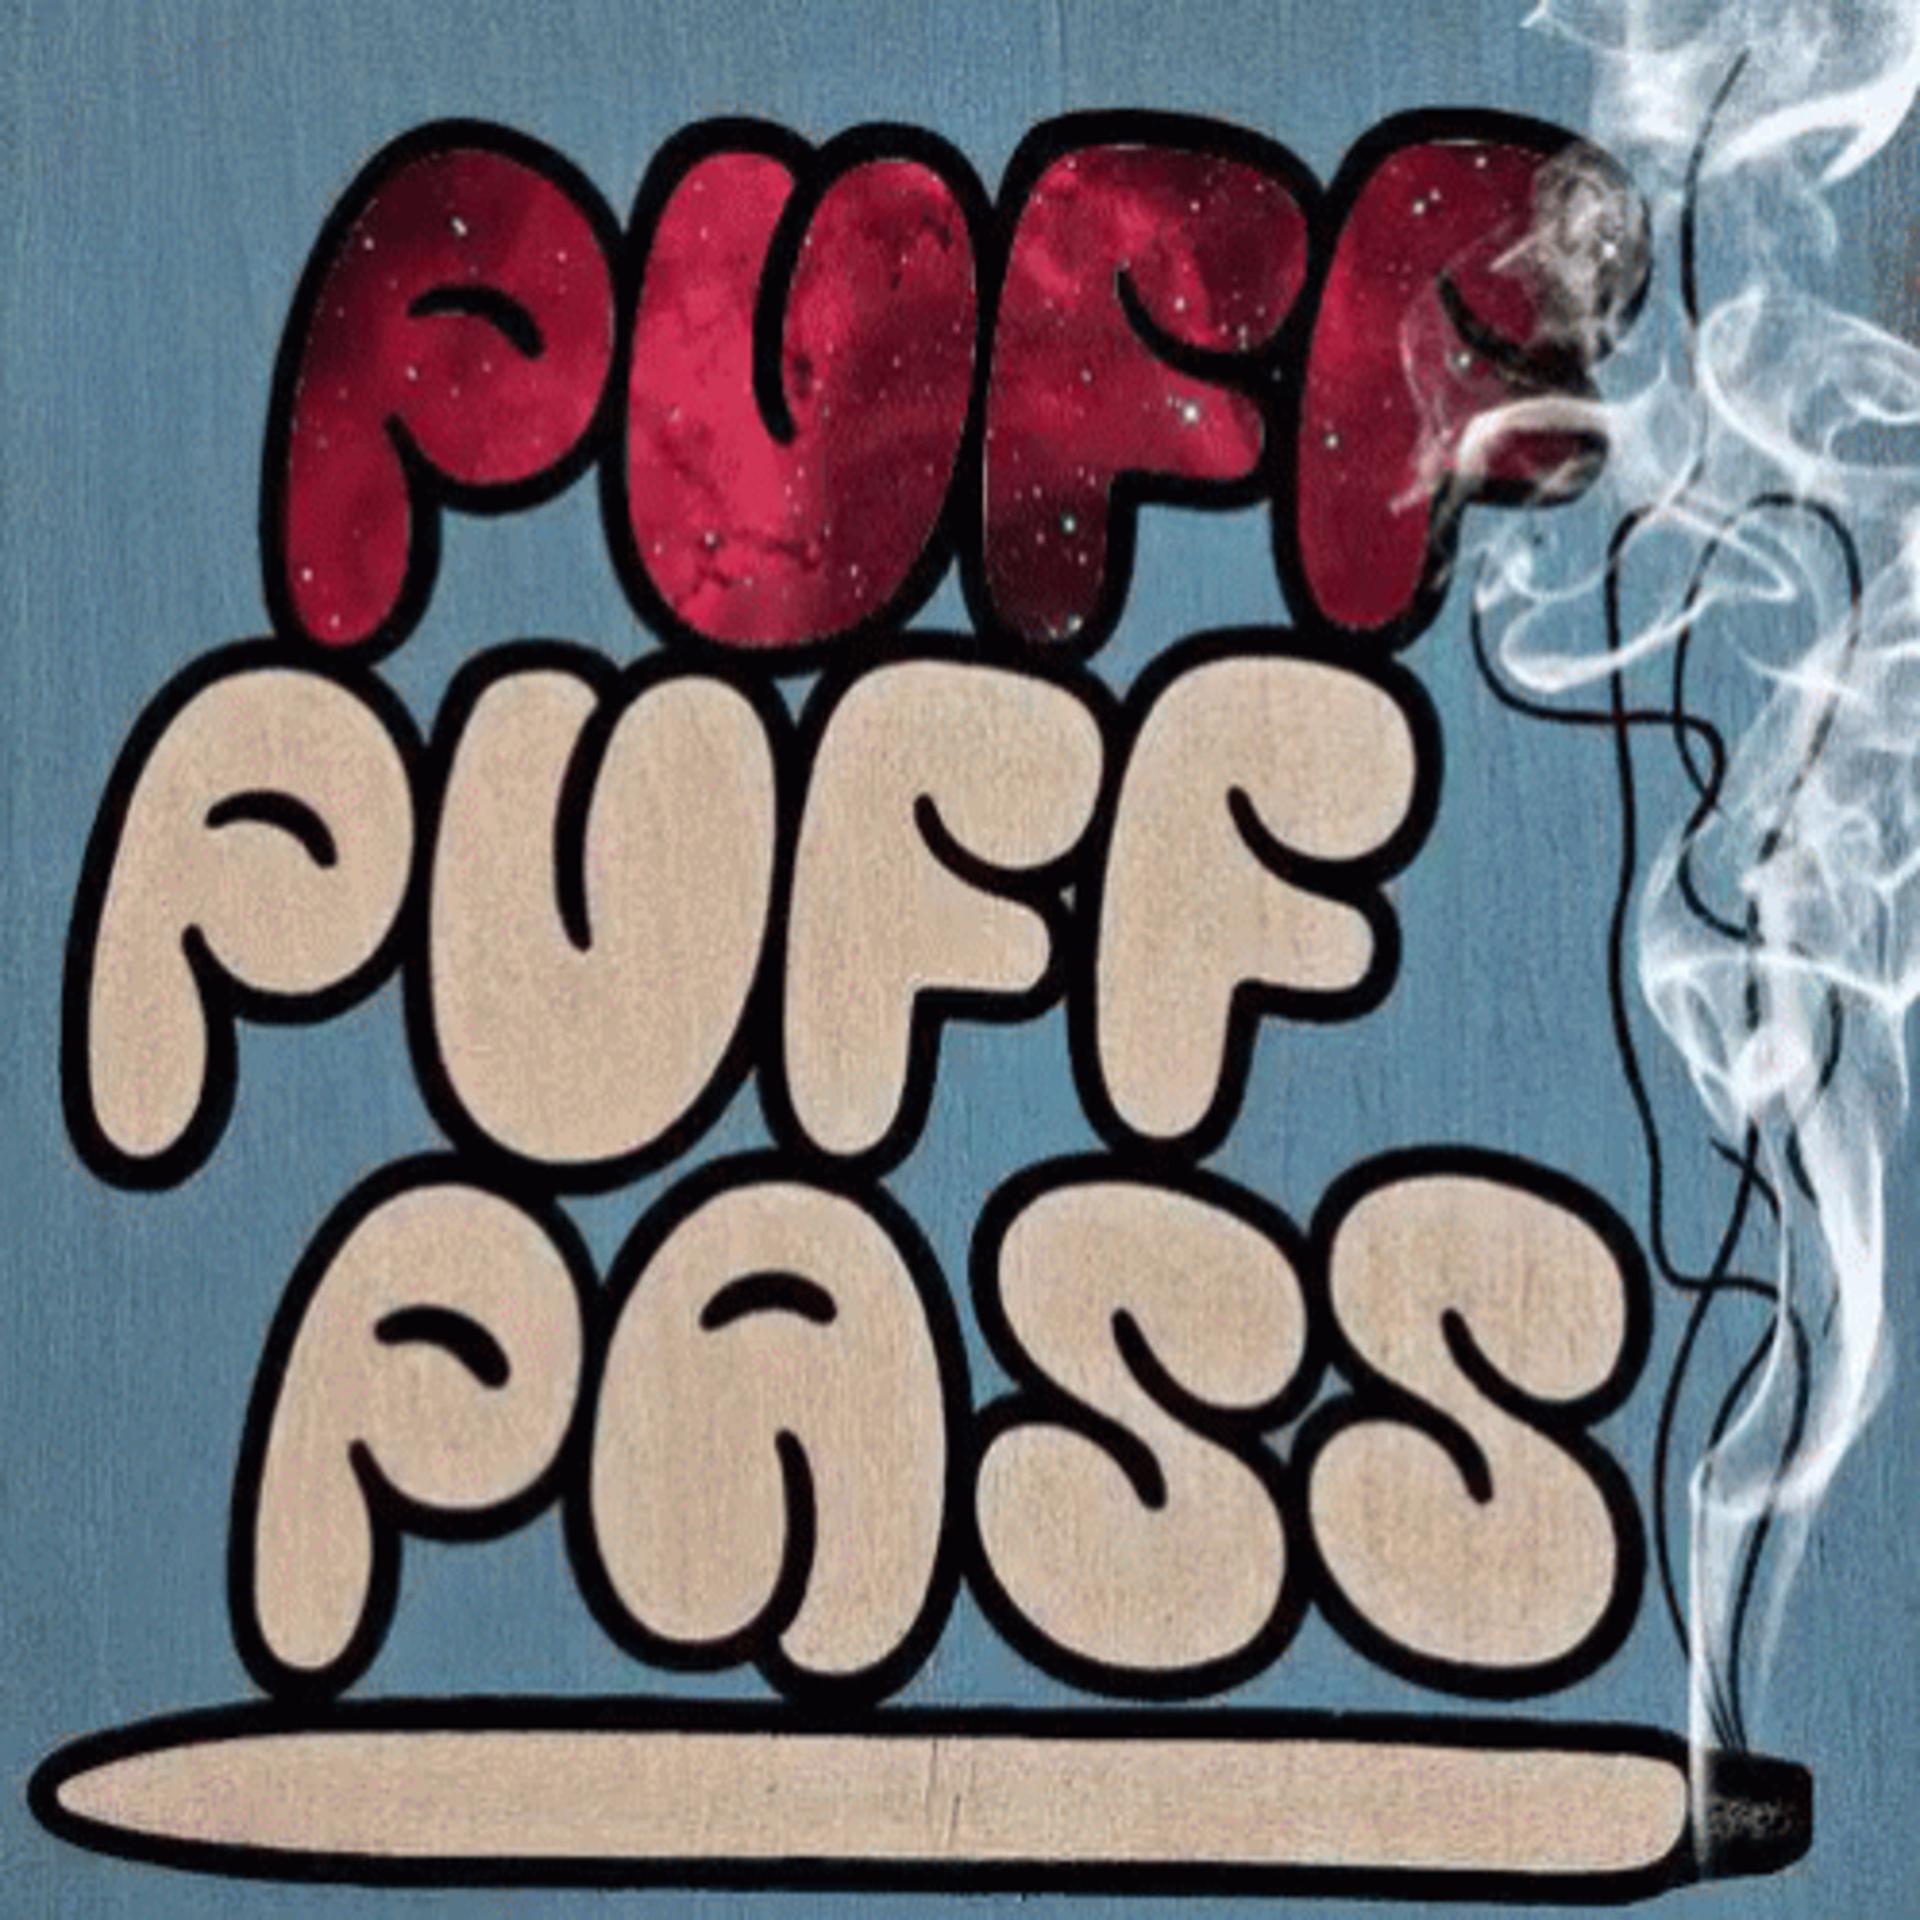 Постер альбома Puff Puff Pass